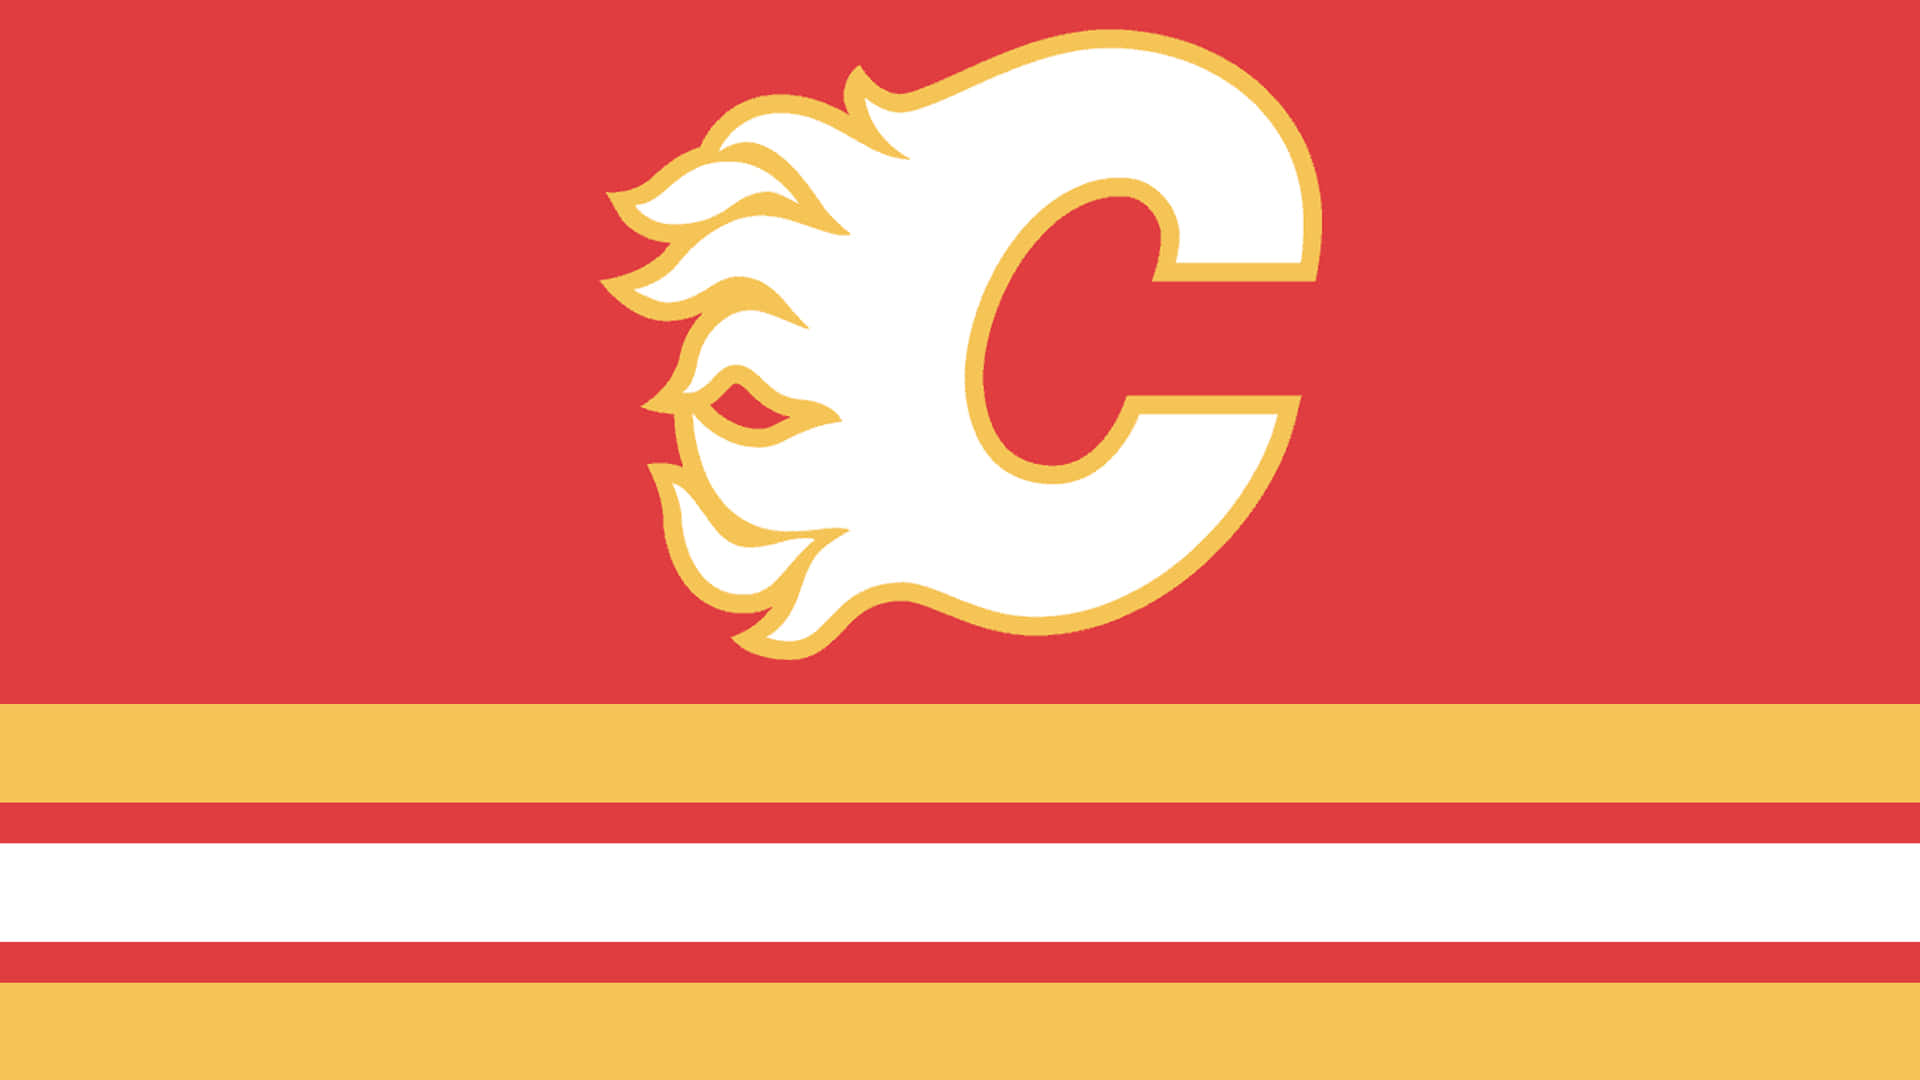 Incercala Tua Squadra Di Hockey Preferita - I Calgary Flames